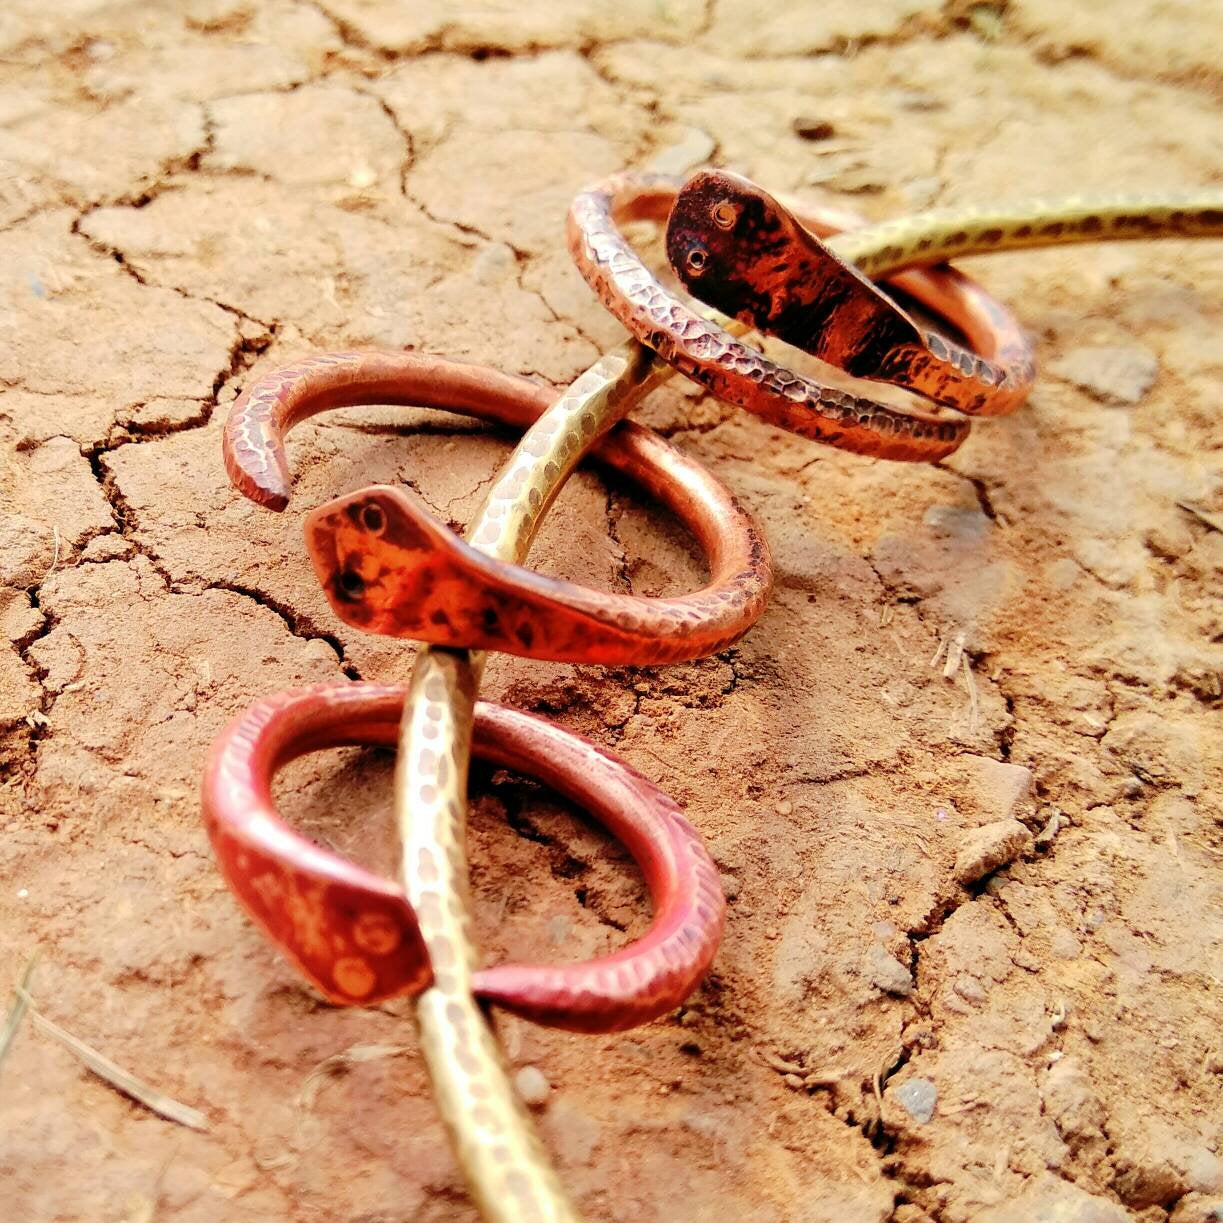 Viking Jörmungandr (Midgard Serpent) Ring, Cuff Hammered Copper or Brass - Ouroboros Ring